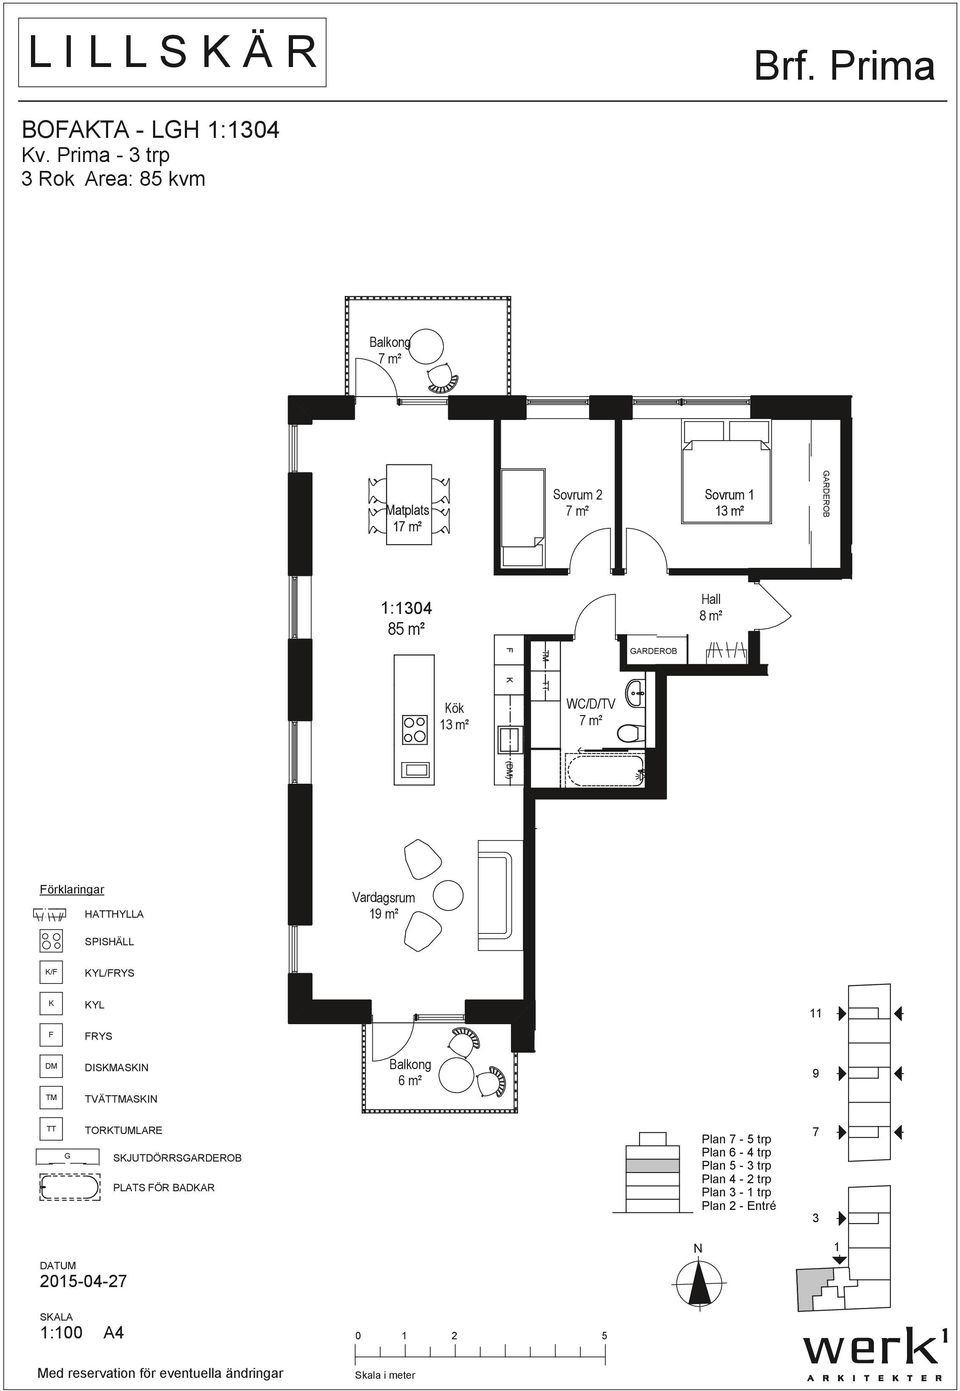 m² 5 m² / örklaringar HAHYLLA m² ök/vardagsrum 25 m² :0 50 m² / YL/RYS YL